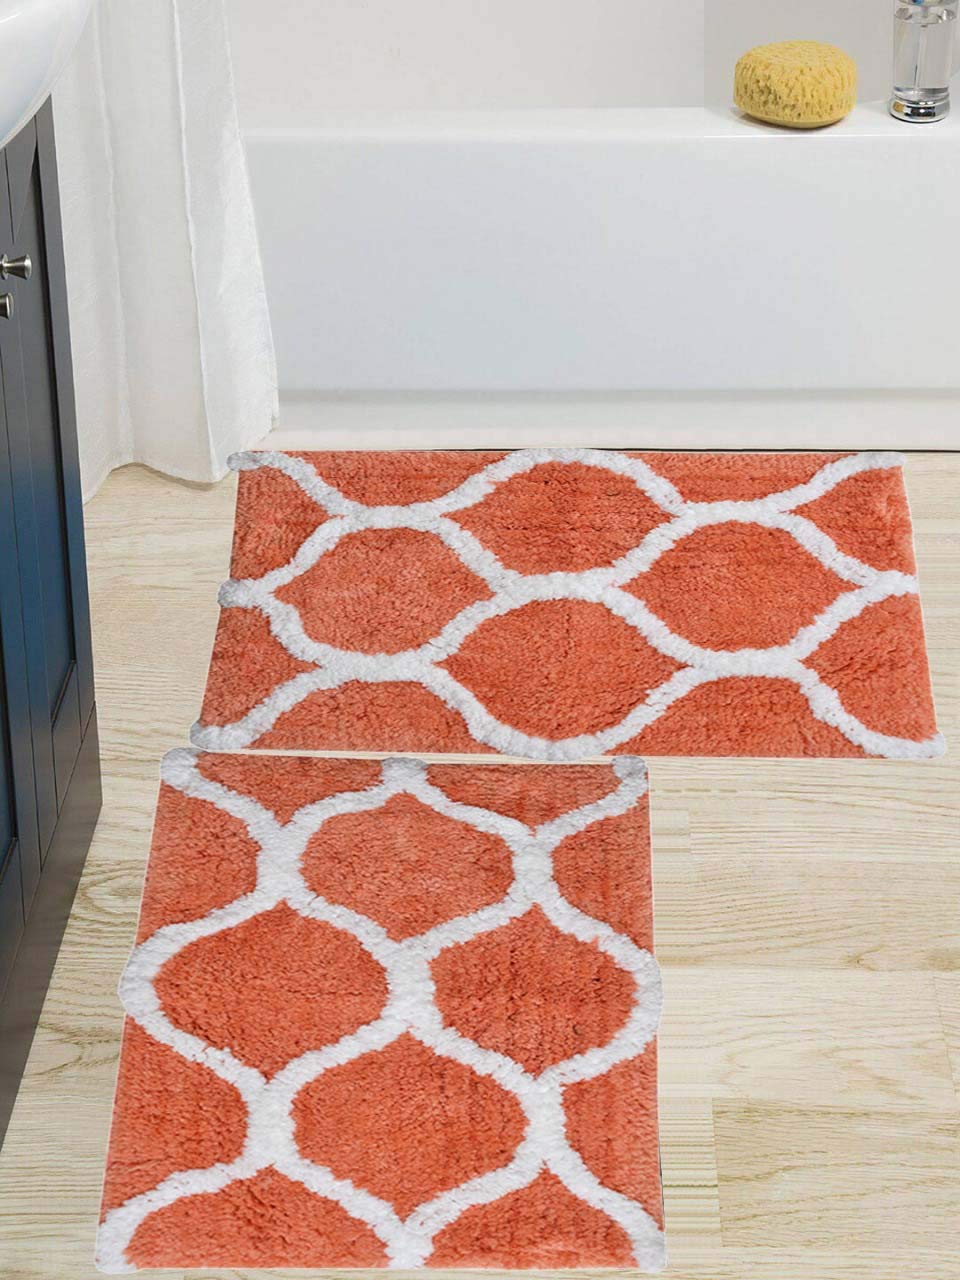 Floor Mats: Glorious Super Soft Microfiber Designer Anti Slip Bathmat